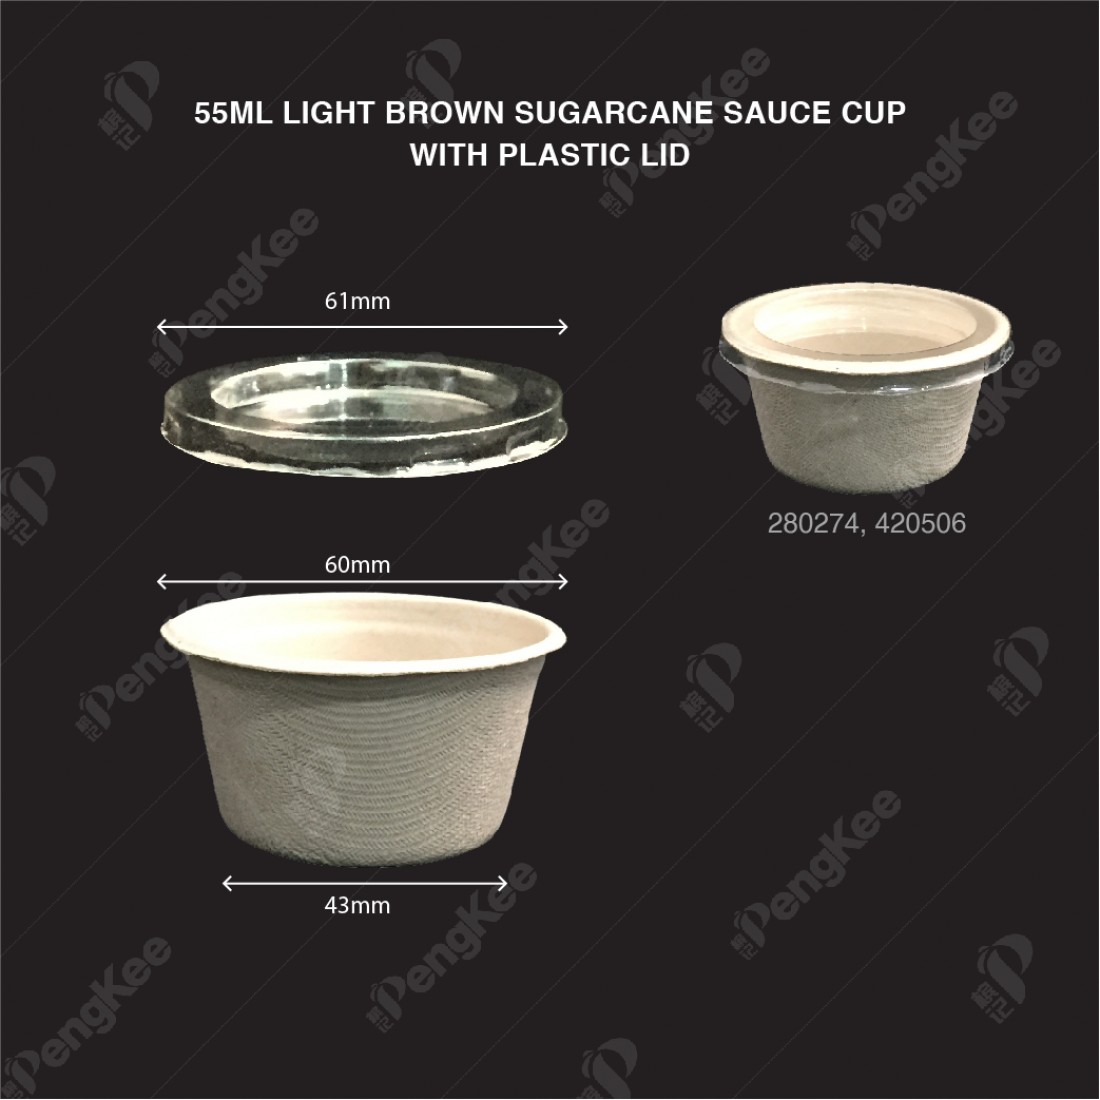 ULN-C SUGARCANE SAUCE CUP 55ml (BROWN)